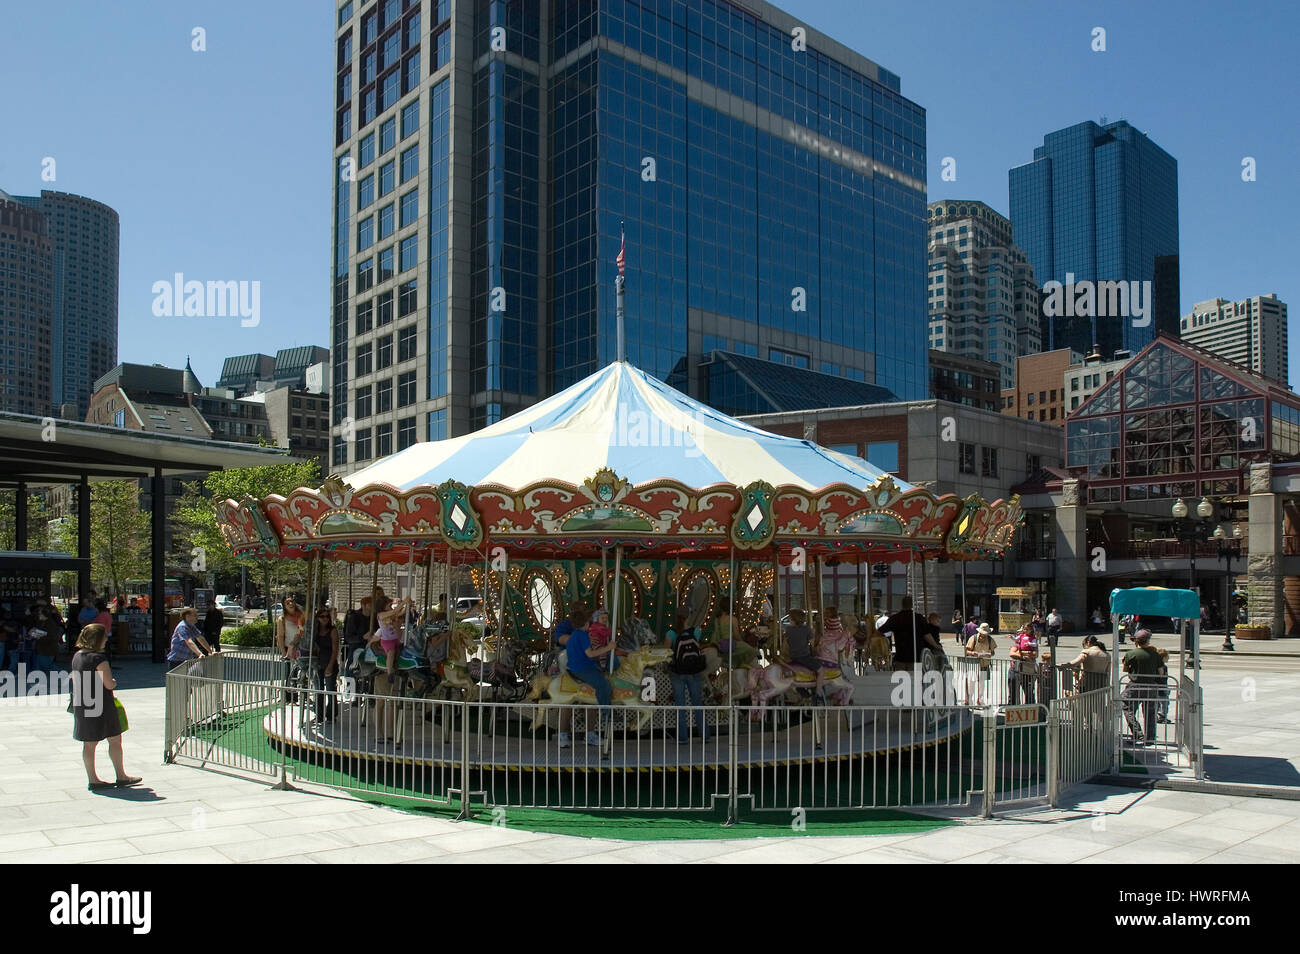 The Carousel on the Rose Kennedy Greenway, Boston, Massachusetts Stock Photo